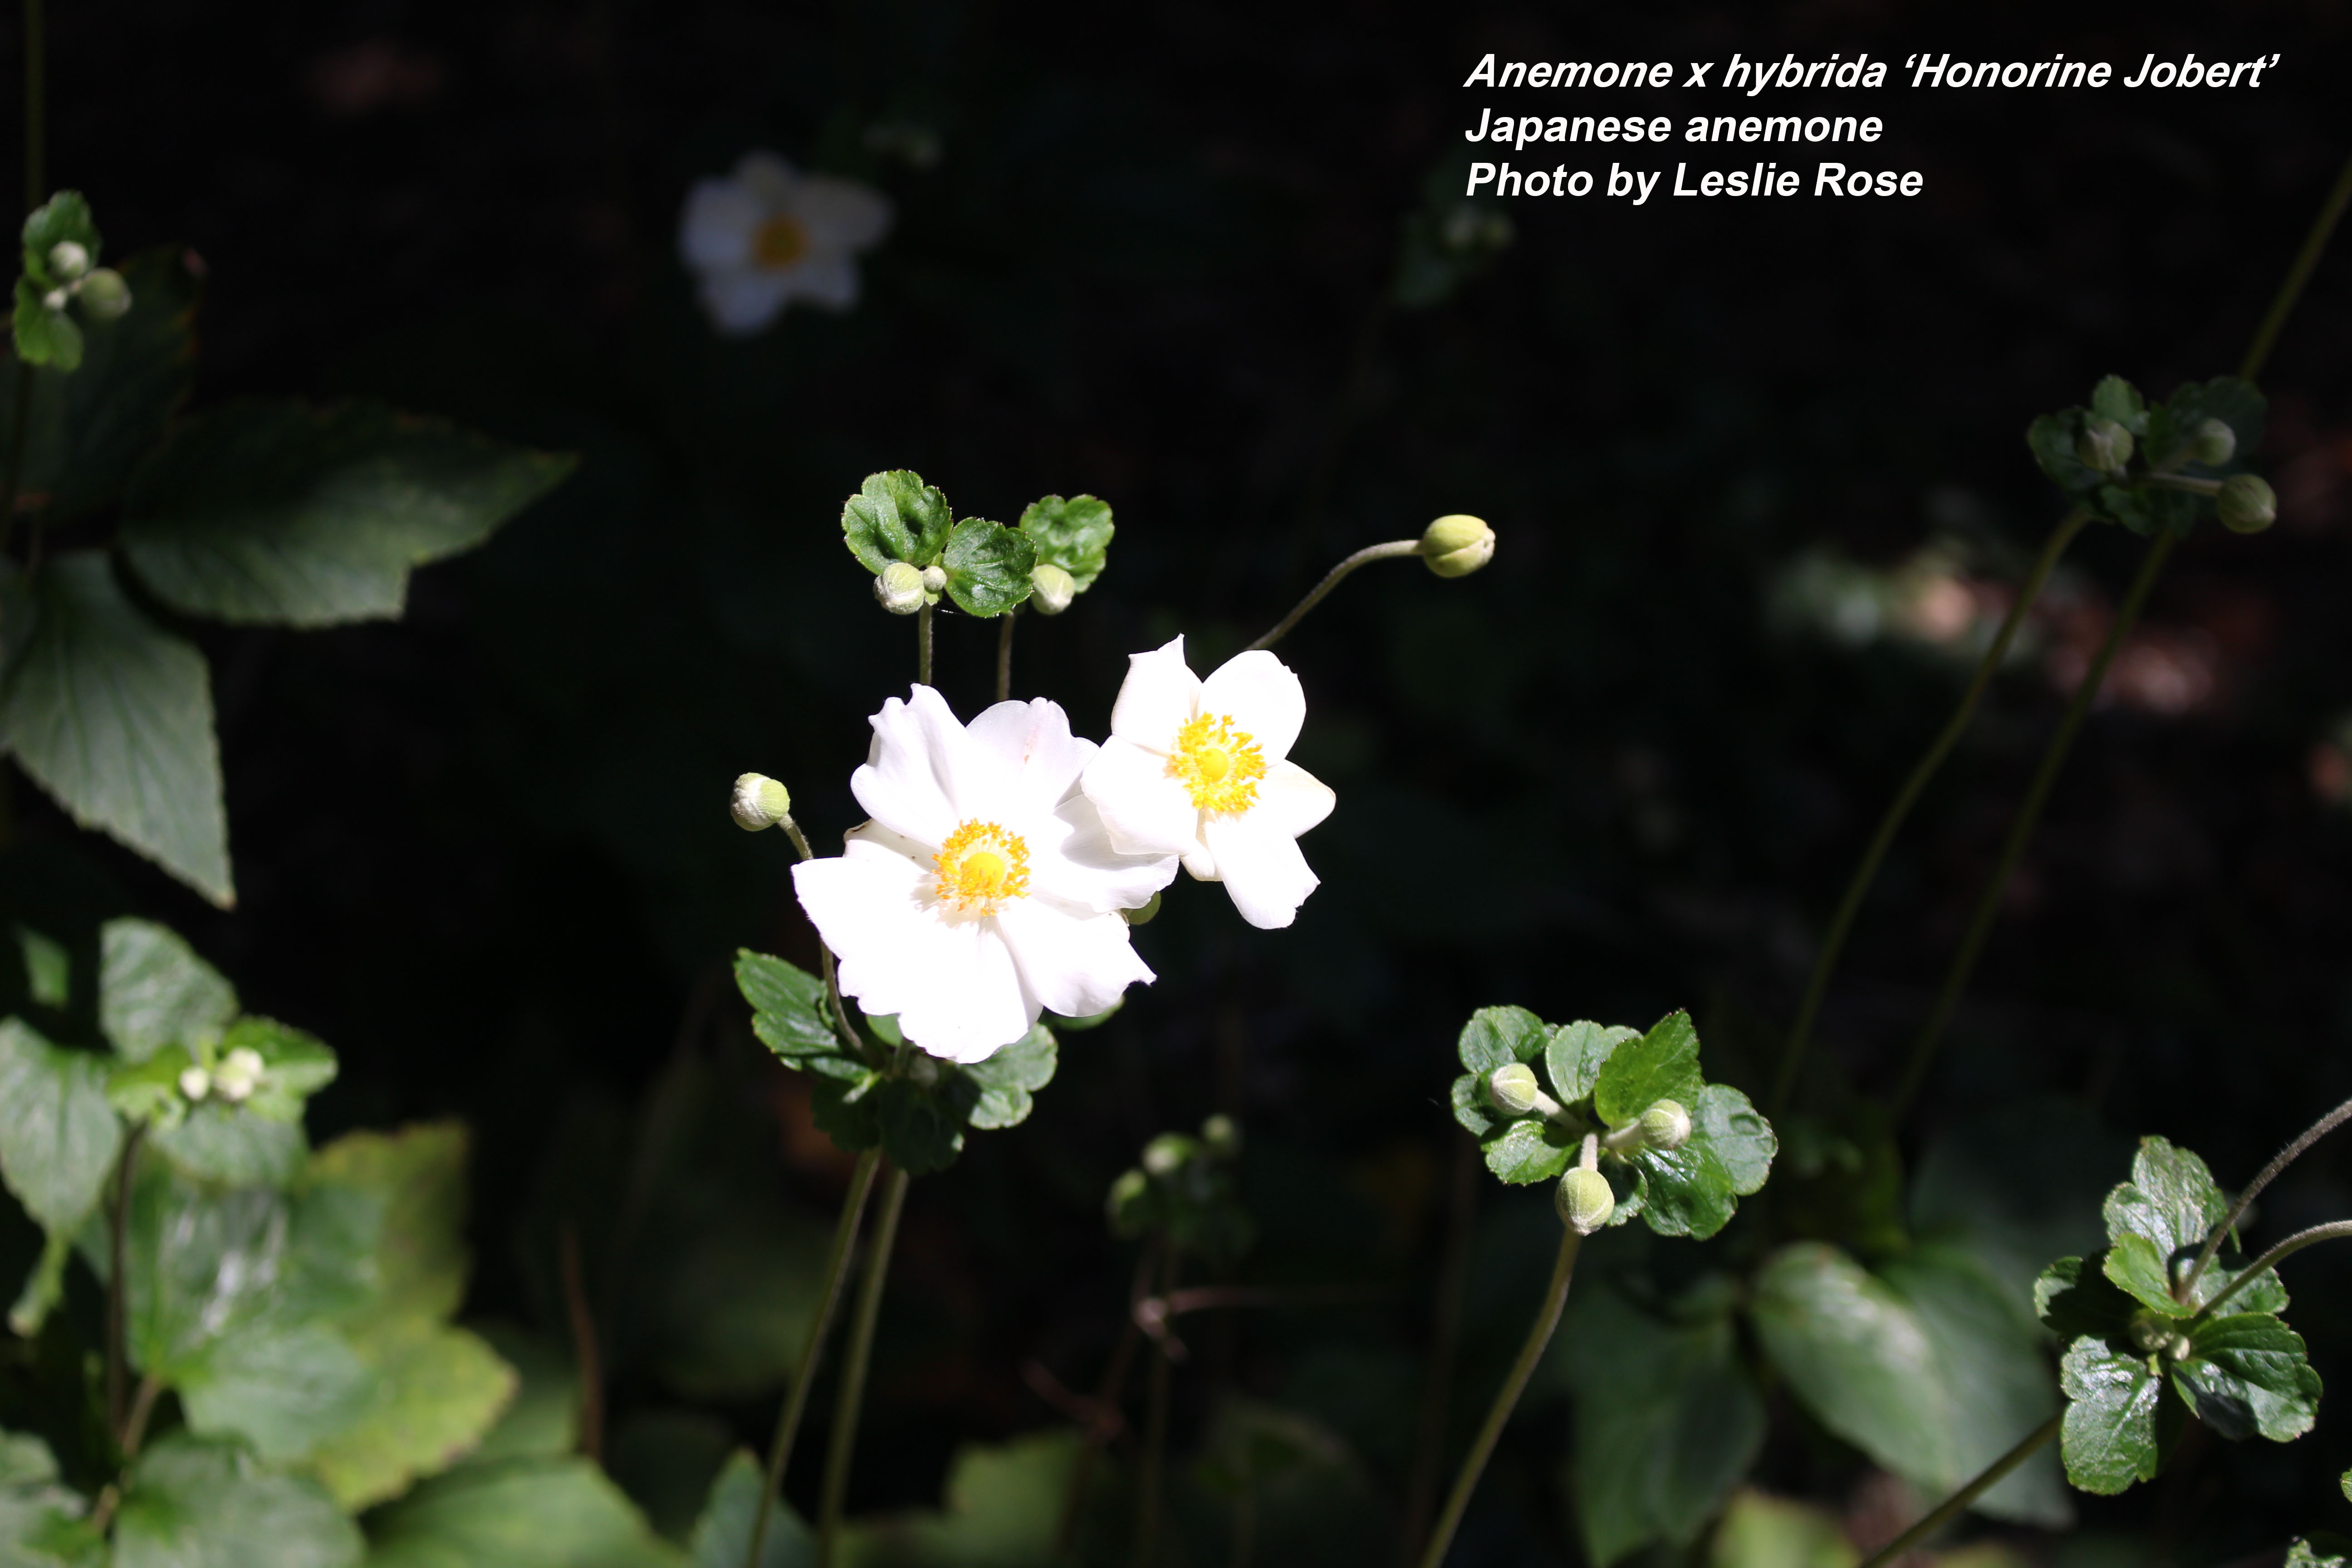 Japanese anemone